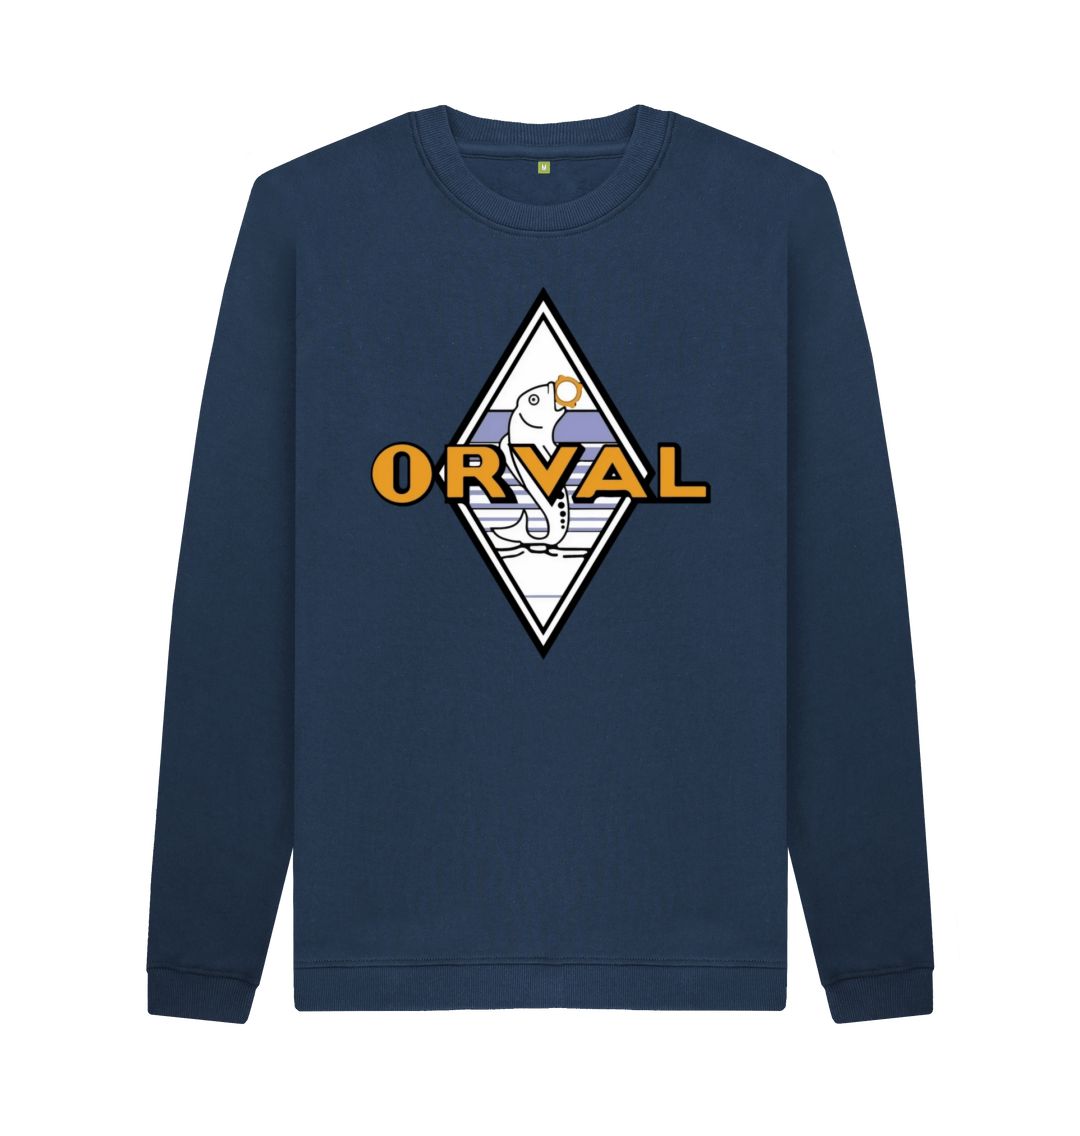 Navy Blue Orval Men's Crew Neck Sweater